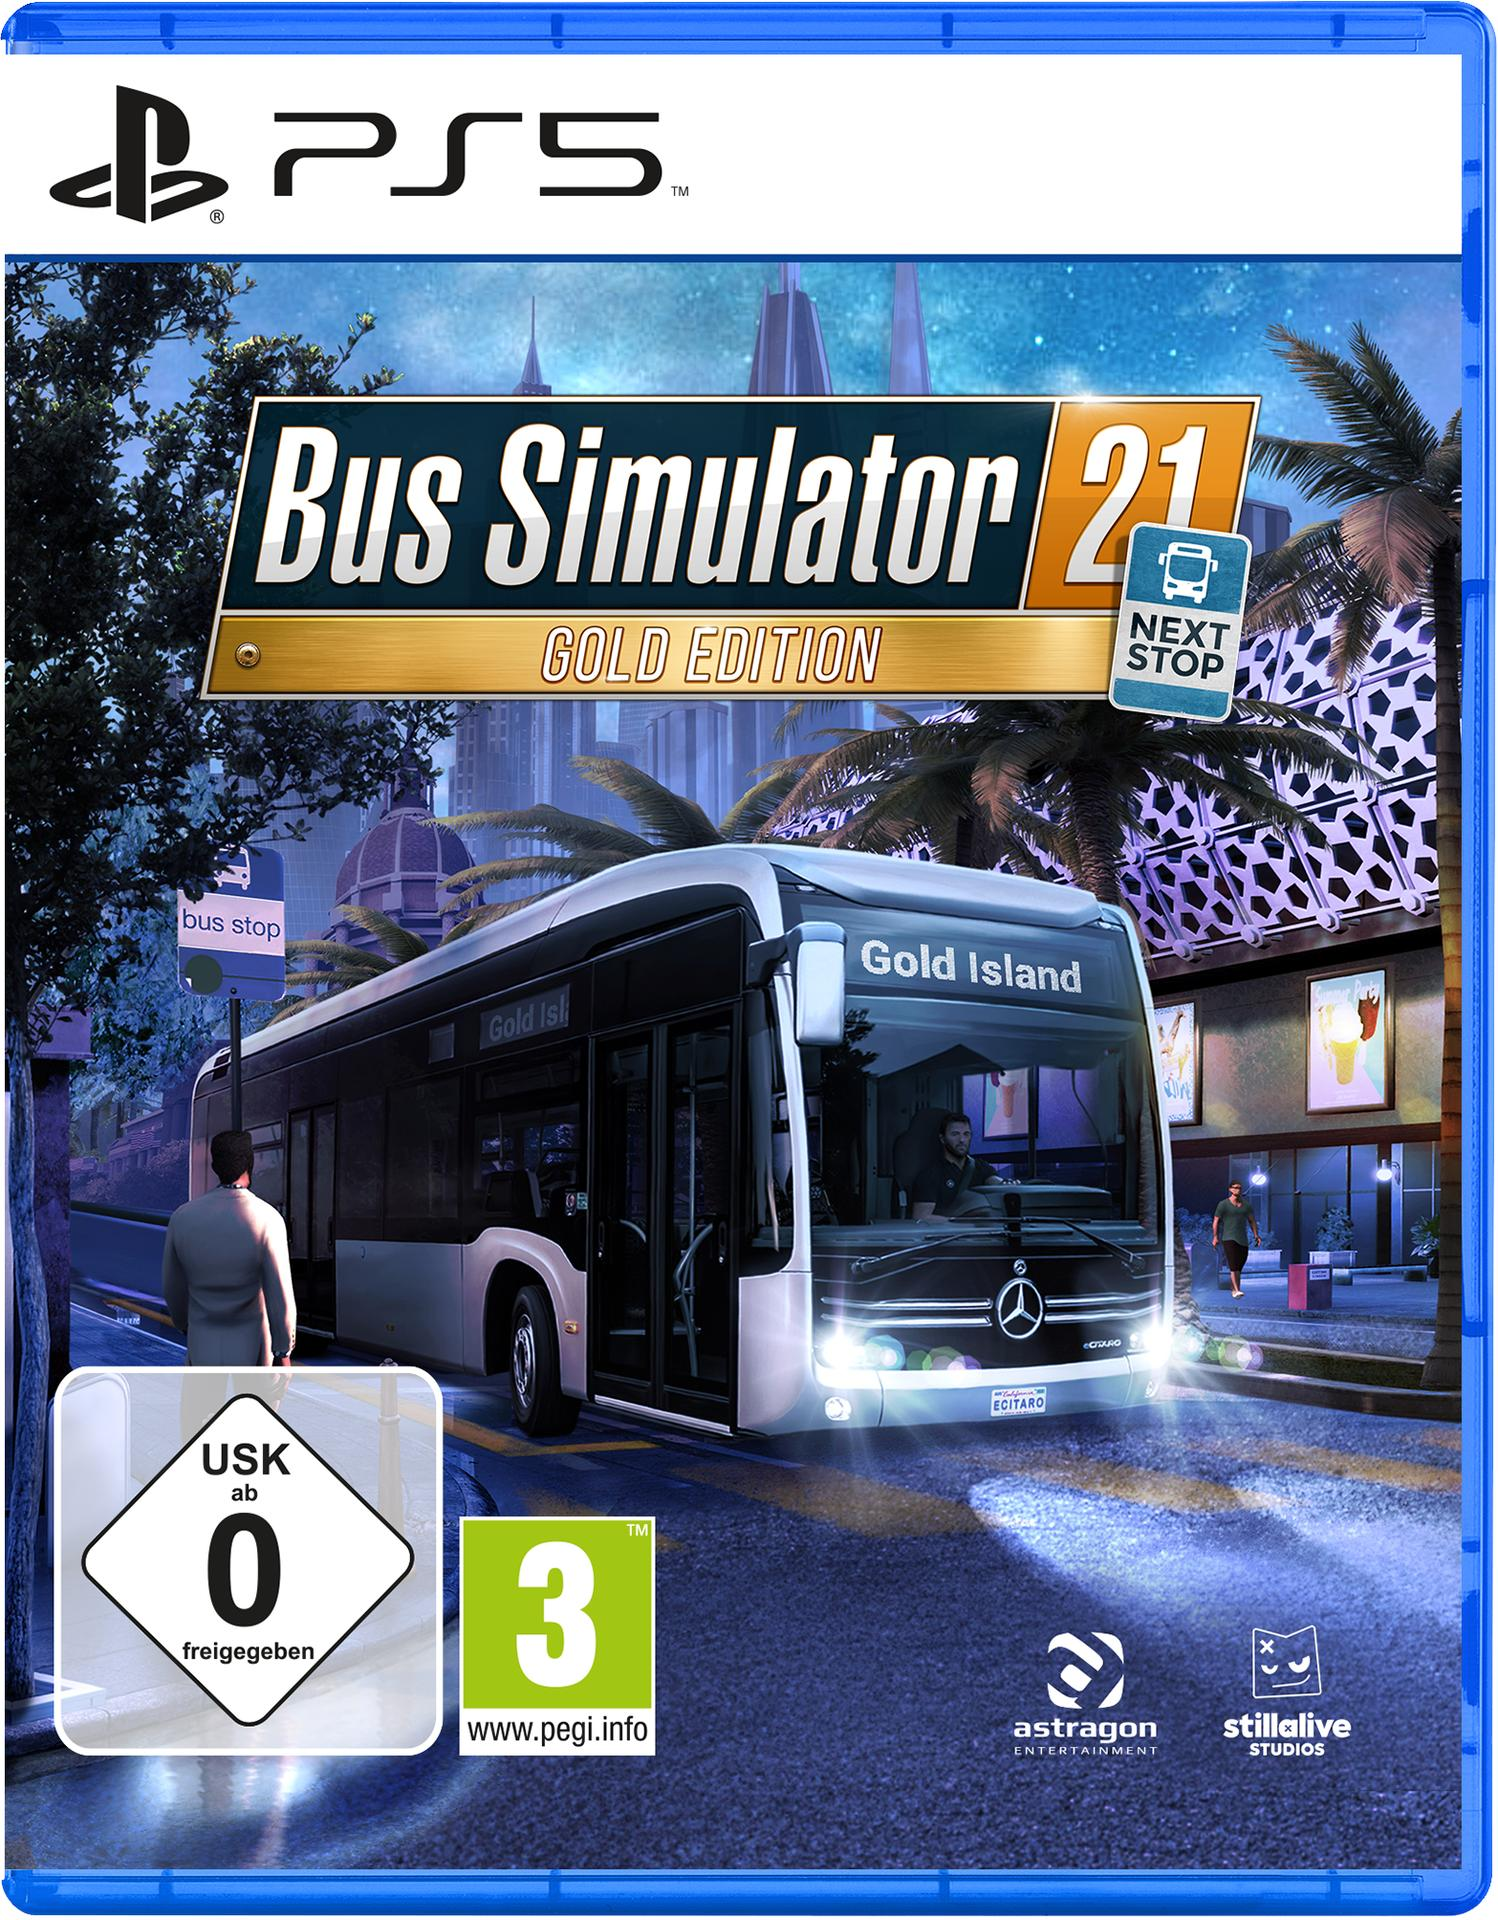 Gold [PlayStation Bus Edition Simulator - Stop 5] 21 Next -